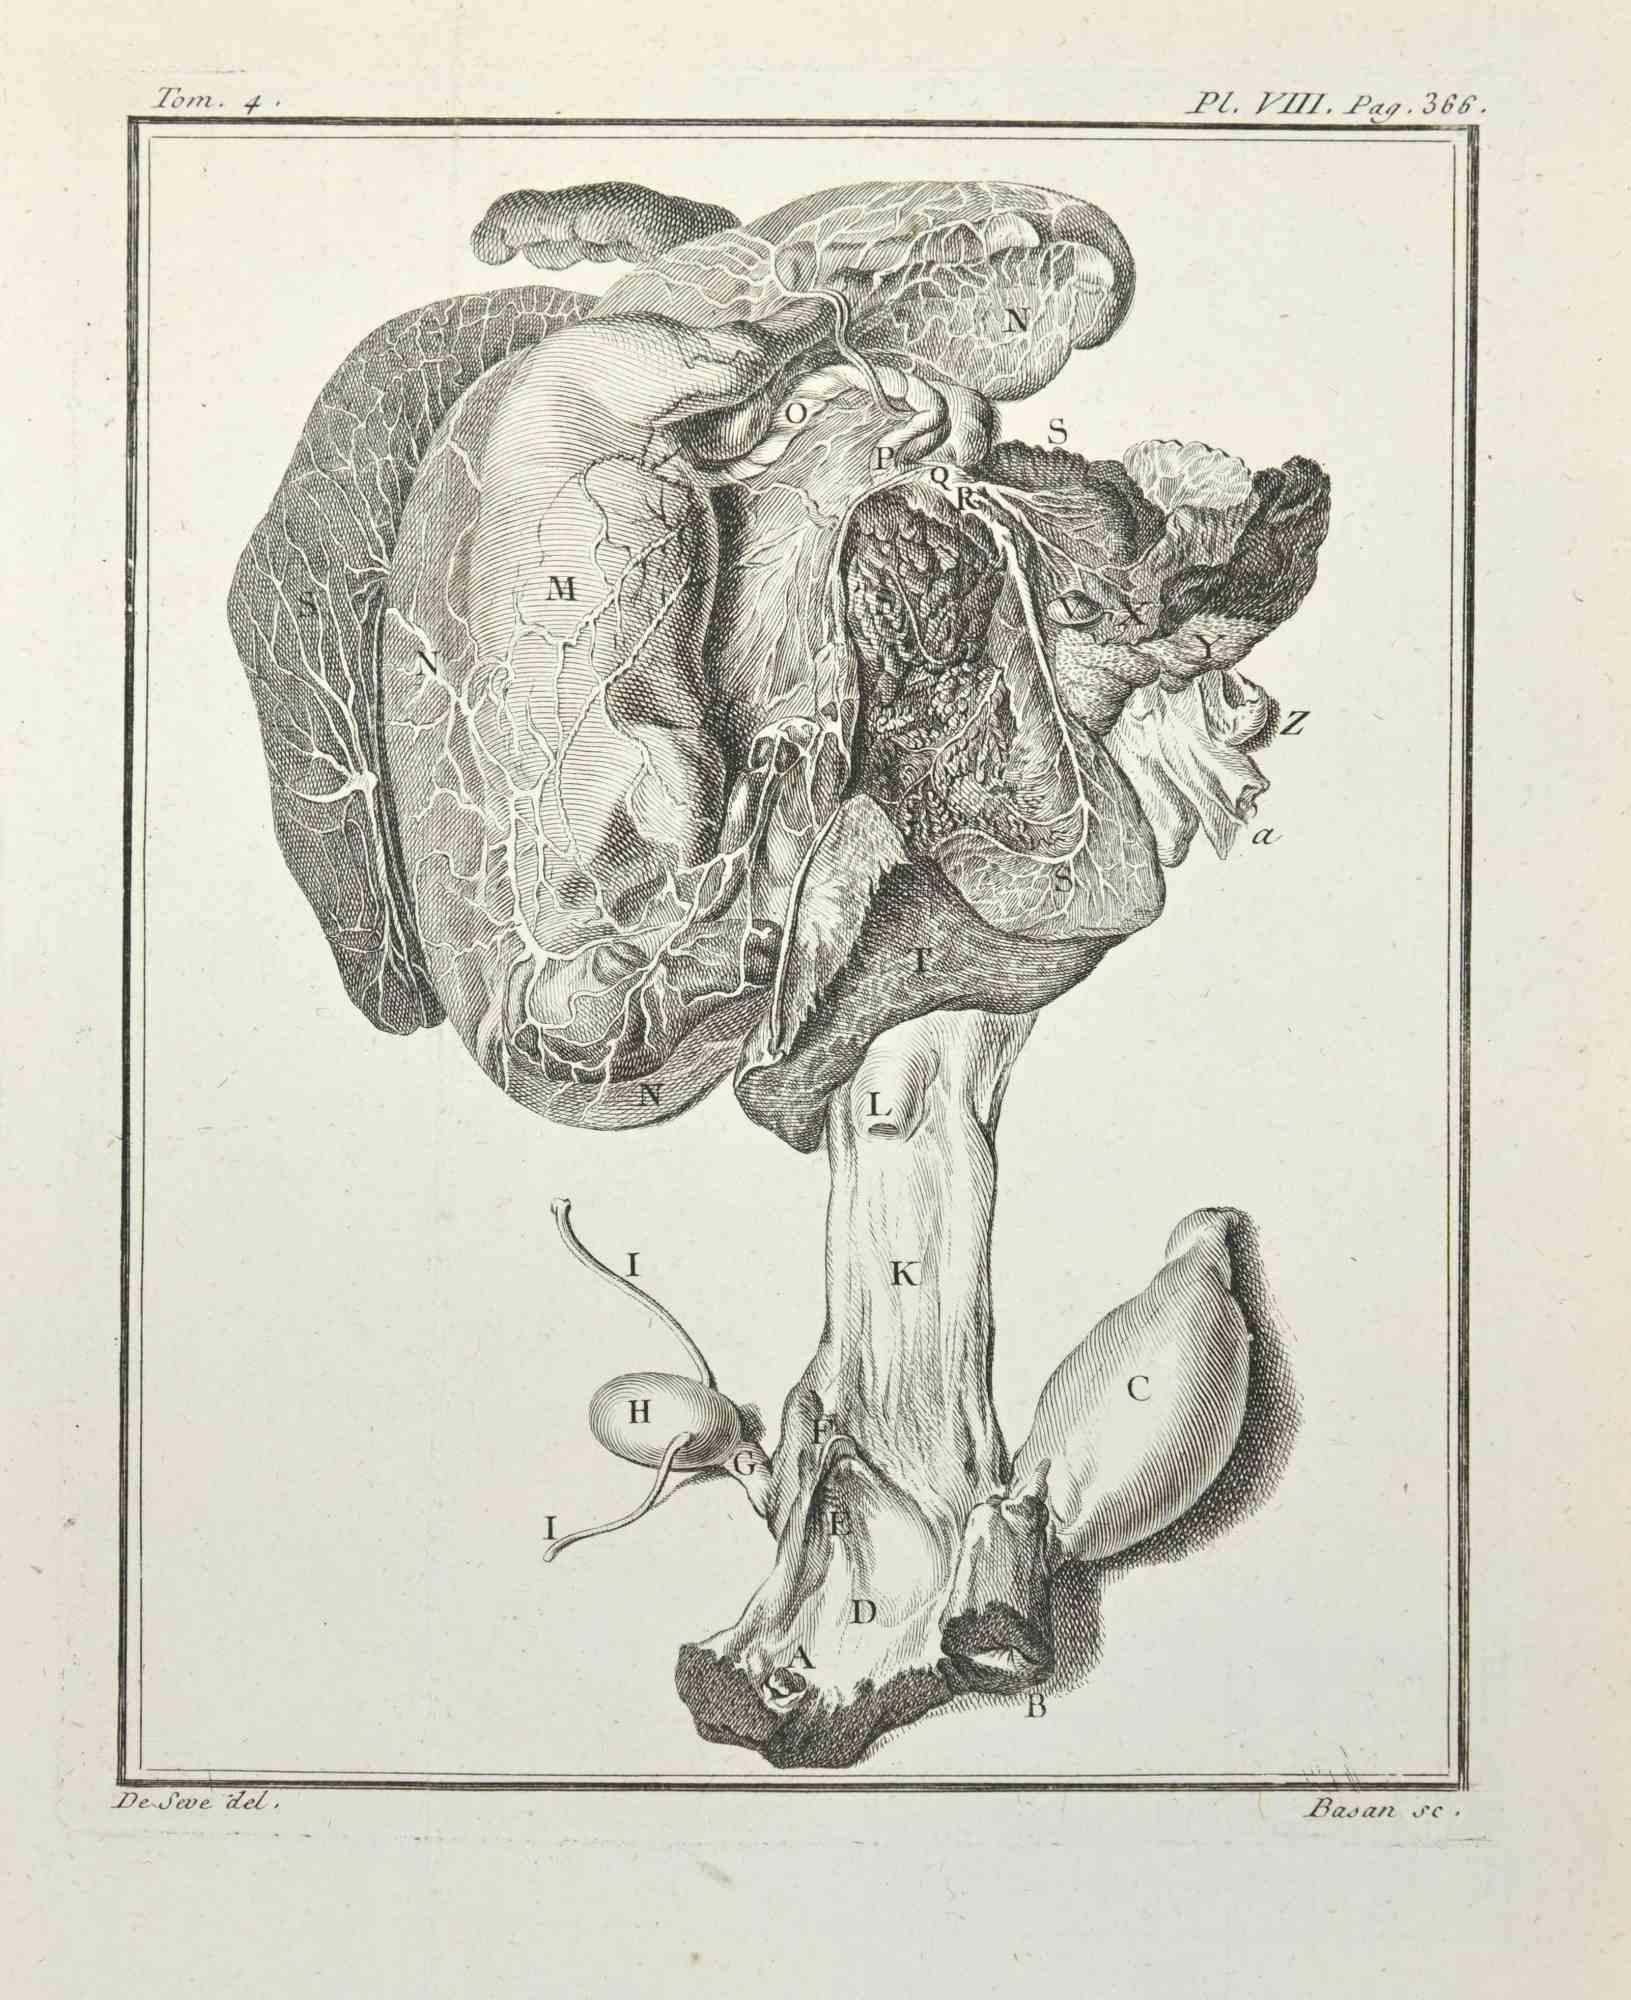 Pierre Francois Basan (1723-1797) after Founan Figurative Print - Anatomy of Animals - Etching by F. Basan - 1771